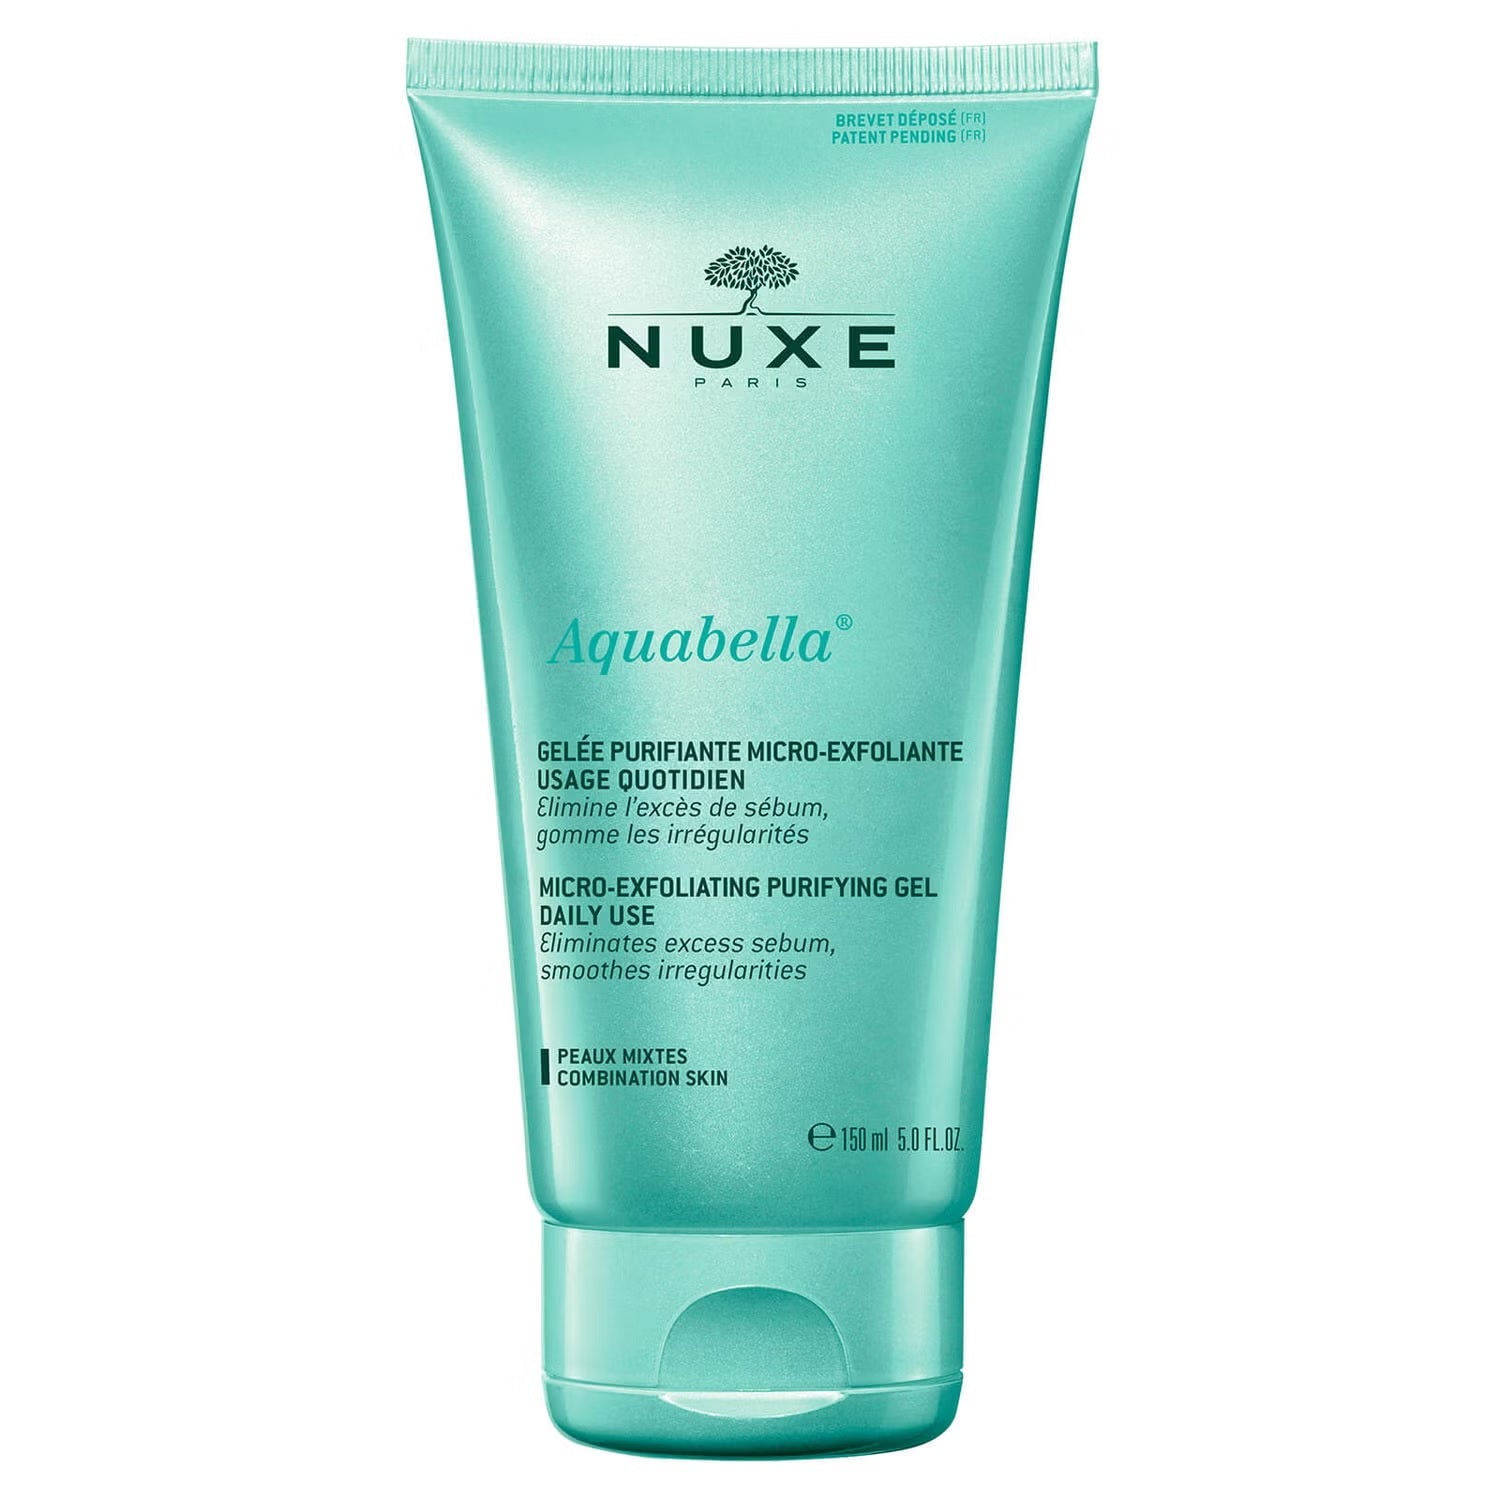 Nuxe Aquabella Micro-Exfoliating Purifying Gel Combination Skin 150ml